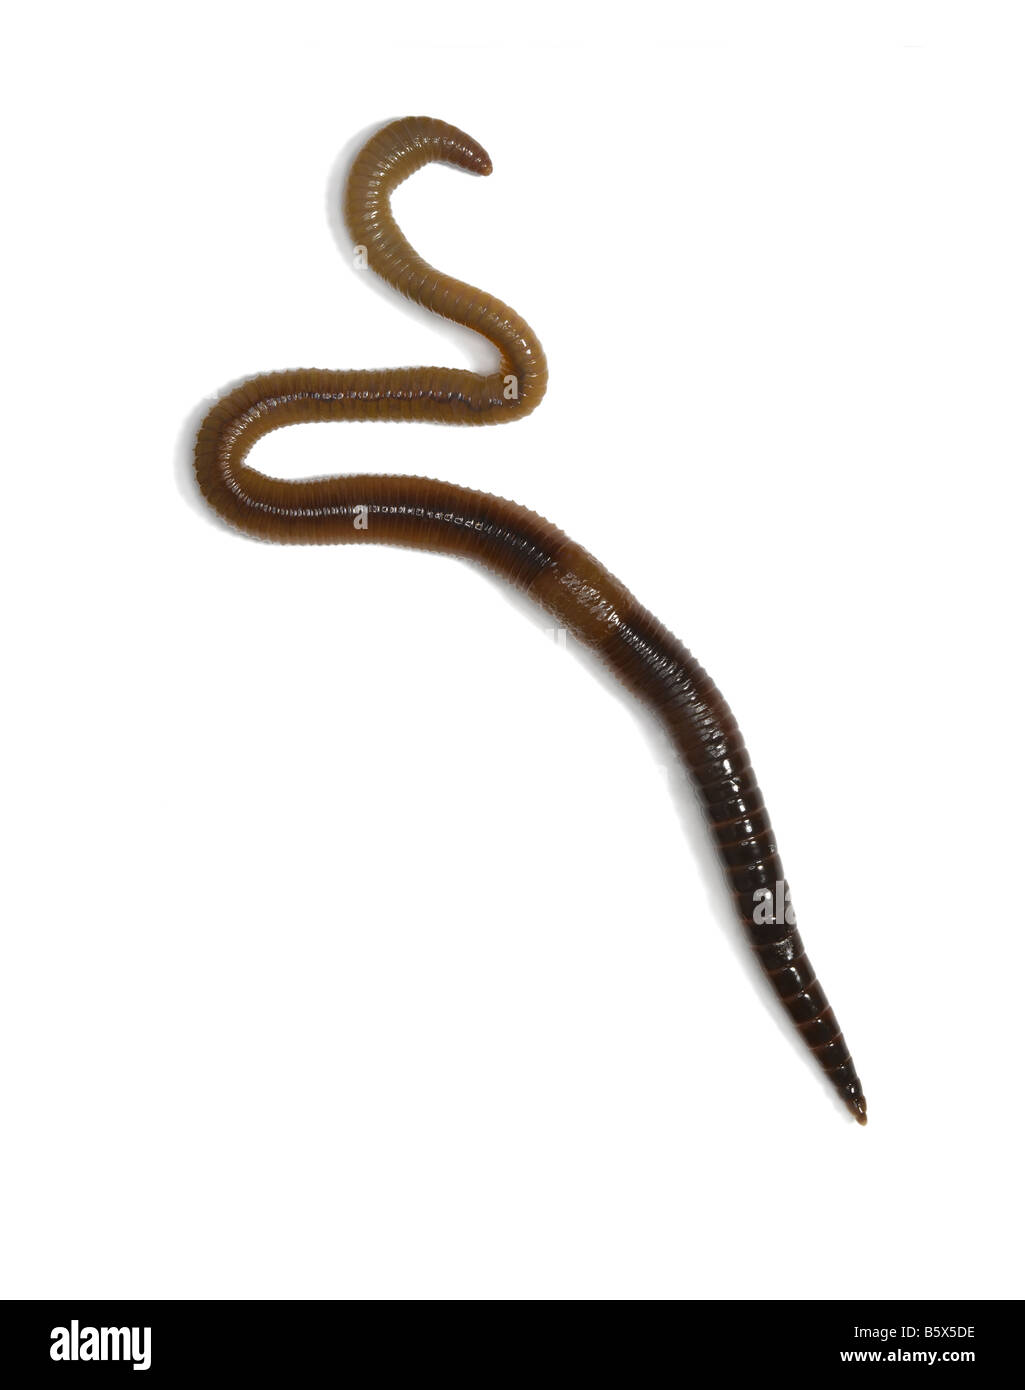 An earth worm Stock Photo